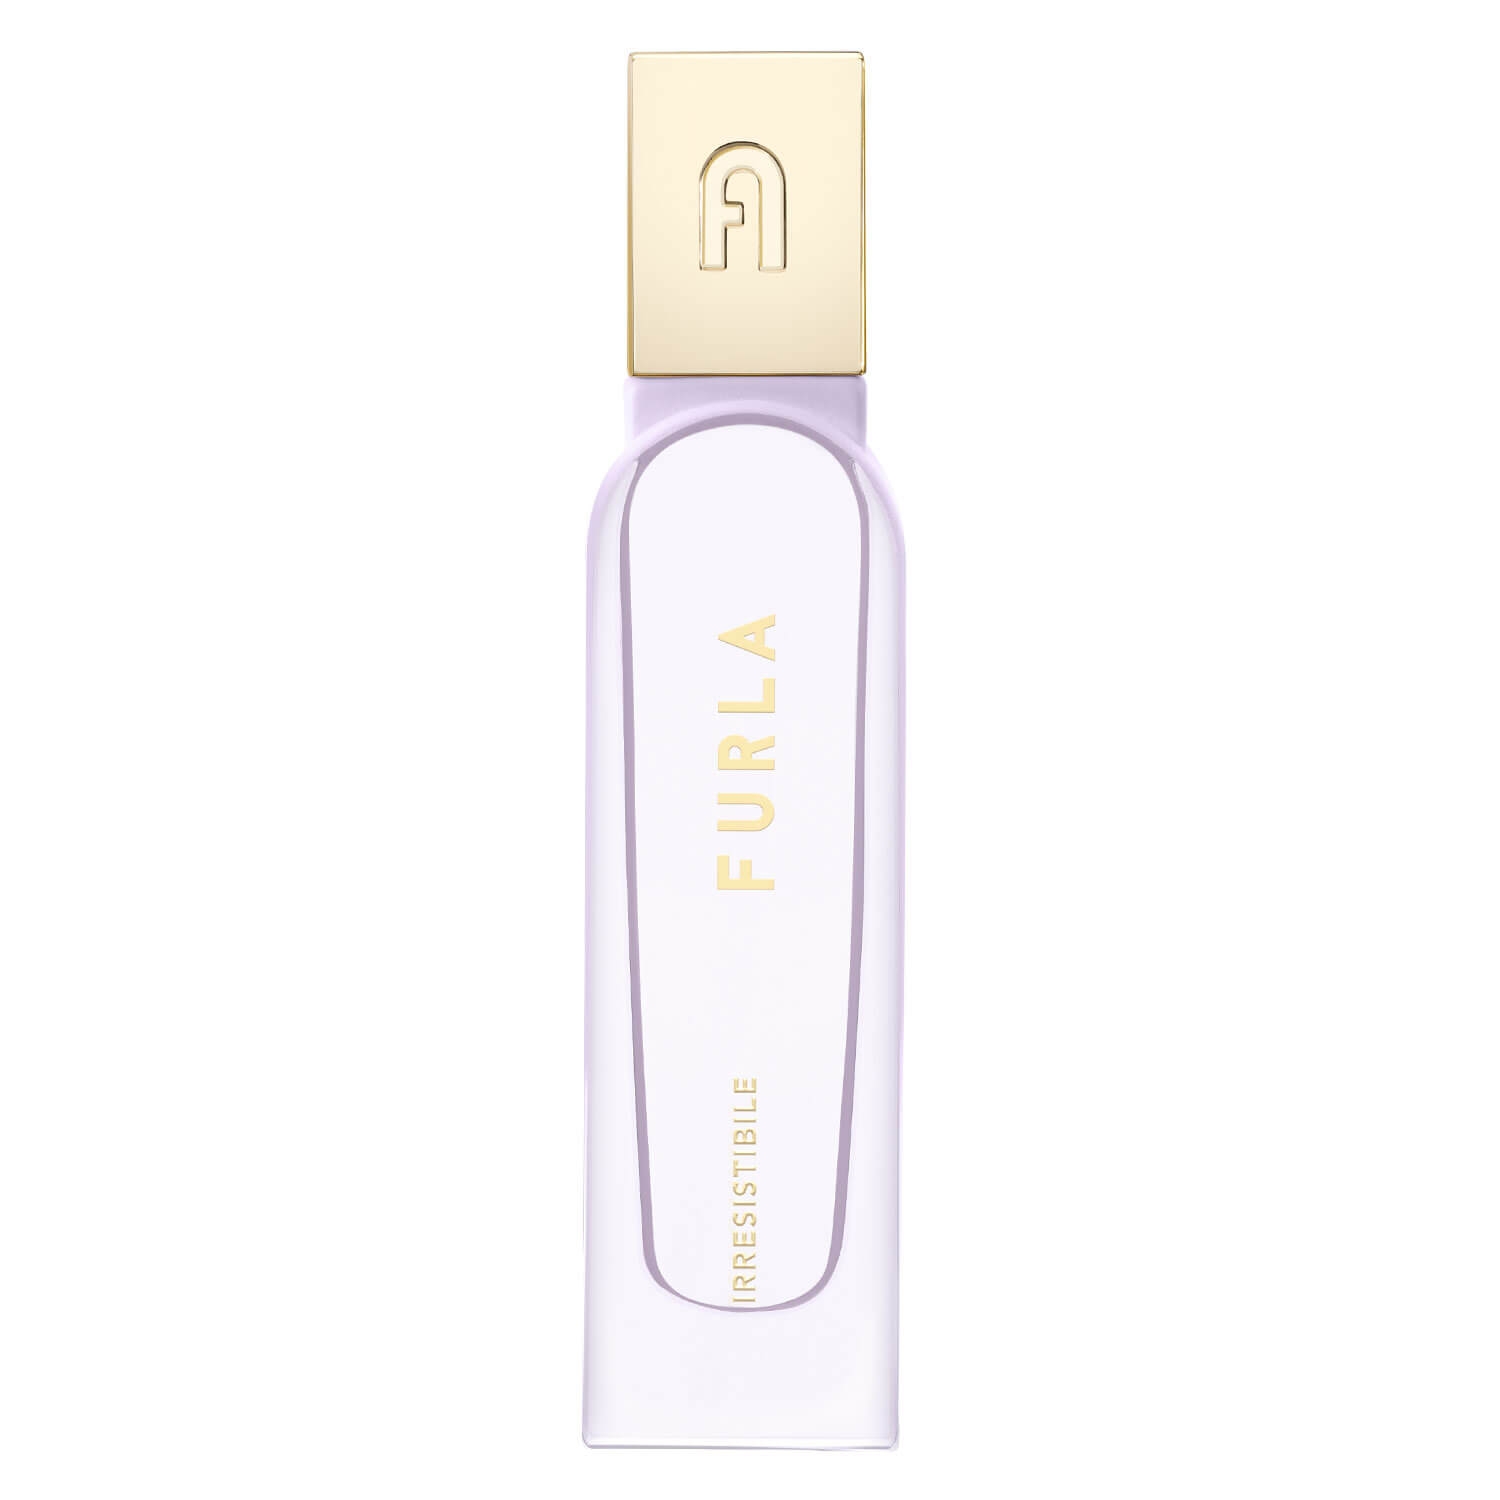 Produktbild von FURLA - Irresistibile Eau de Parfum